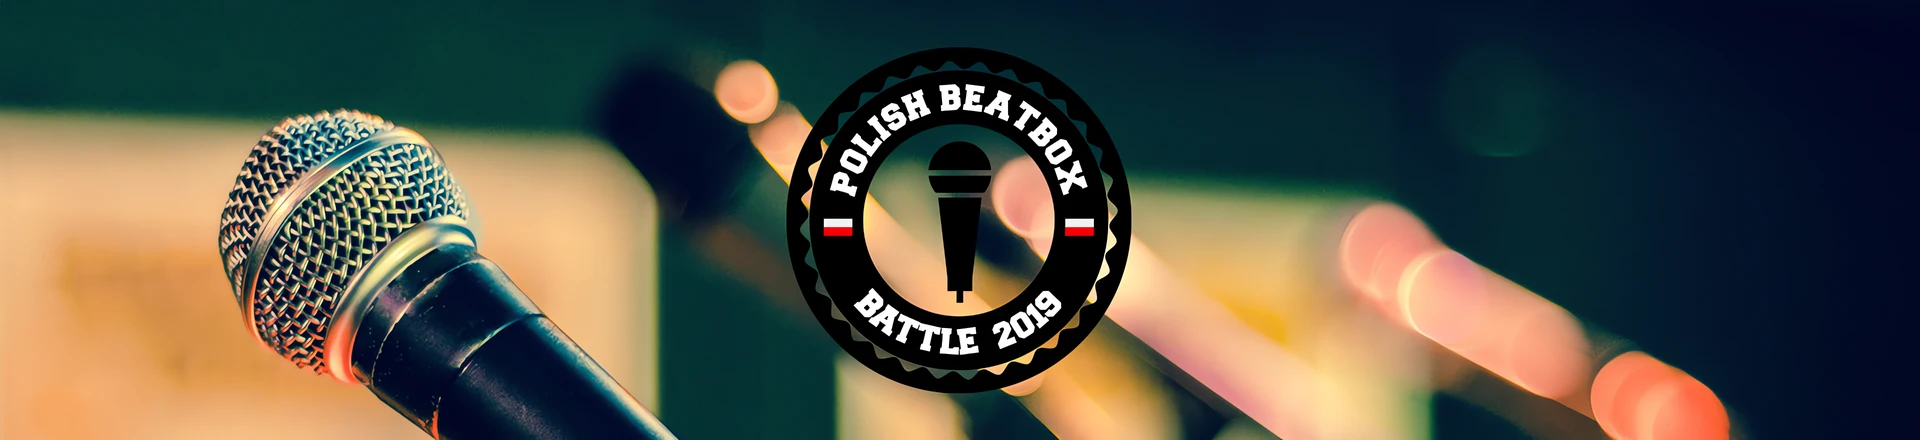 Rusza Polish Beatbox Battle 2019